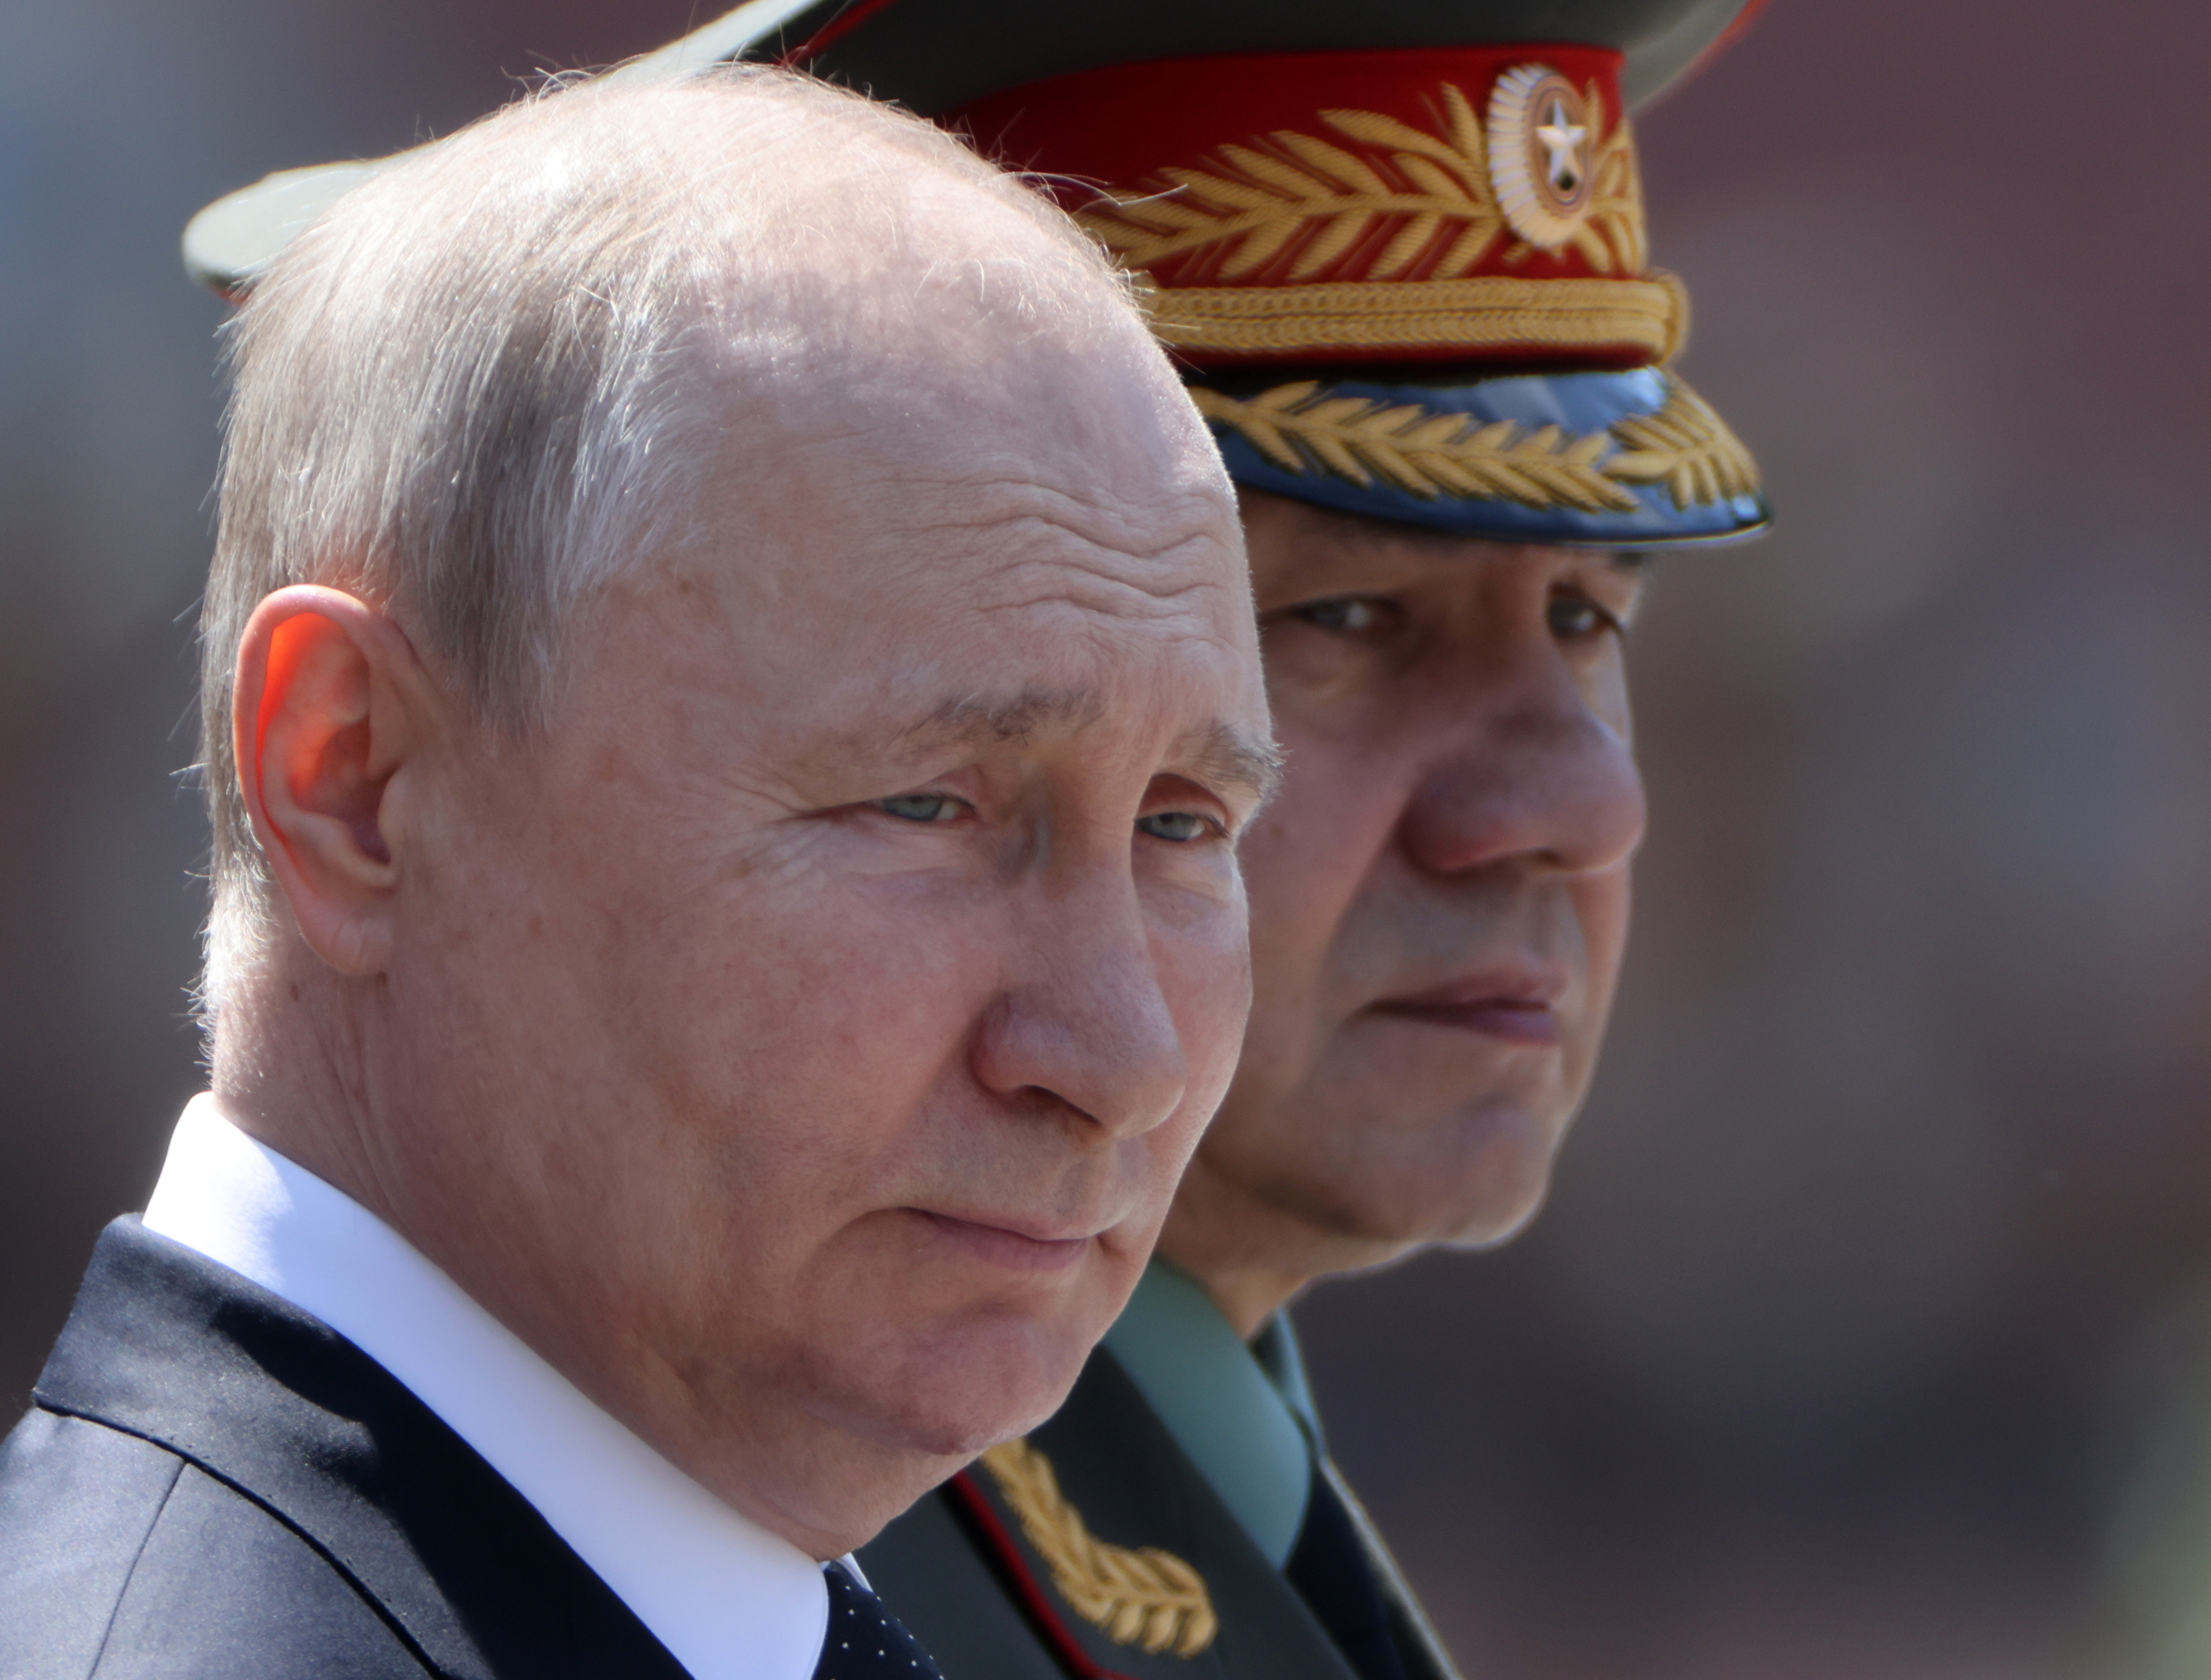 Putin may feel “need to reassert authority,” warns ex U.S. intel officer